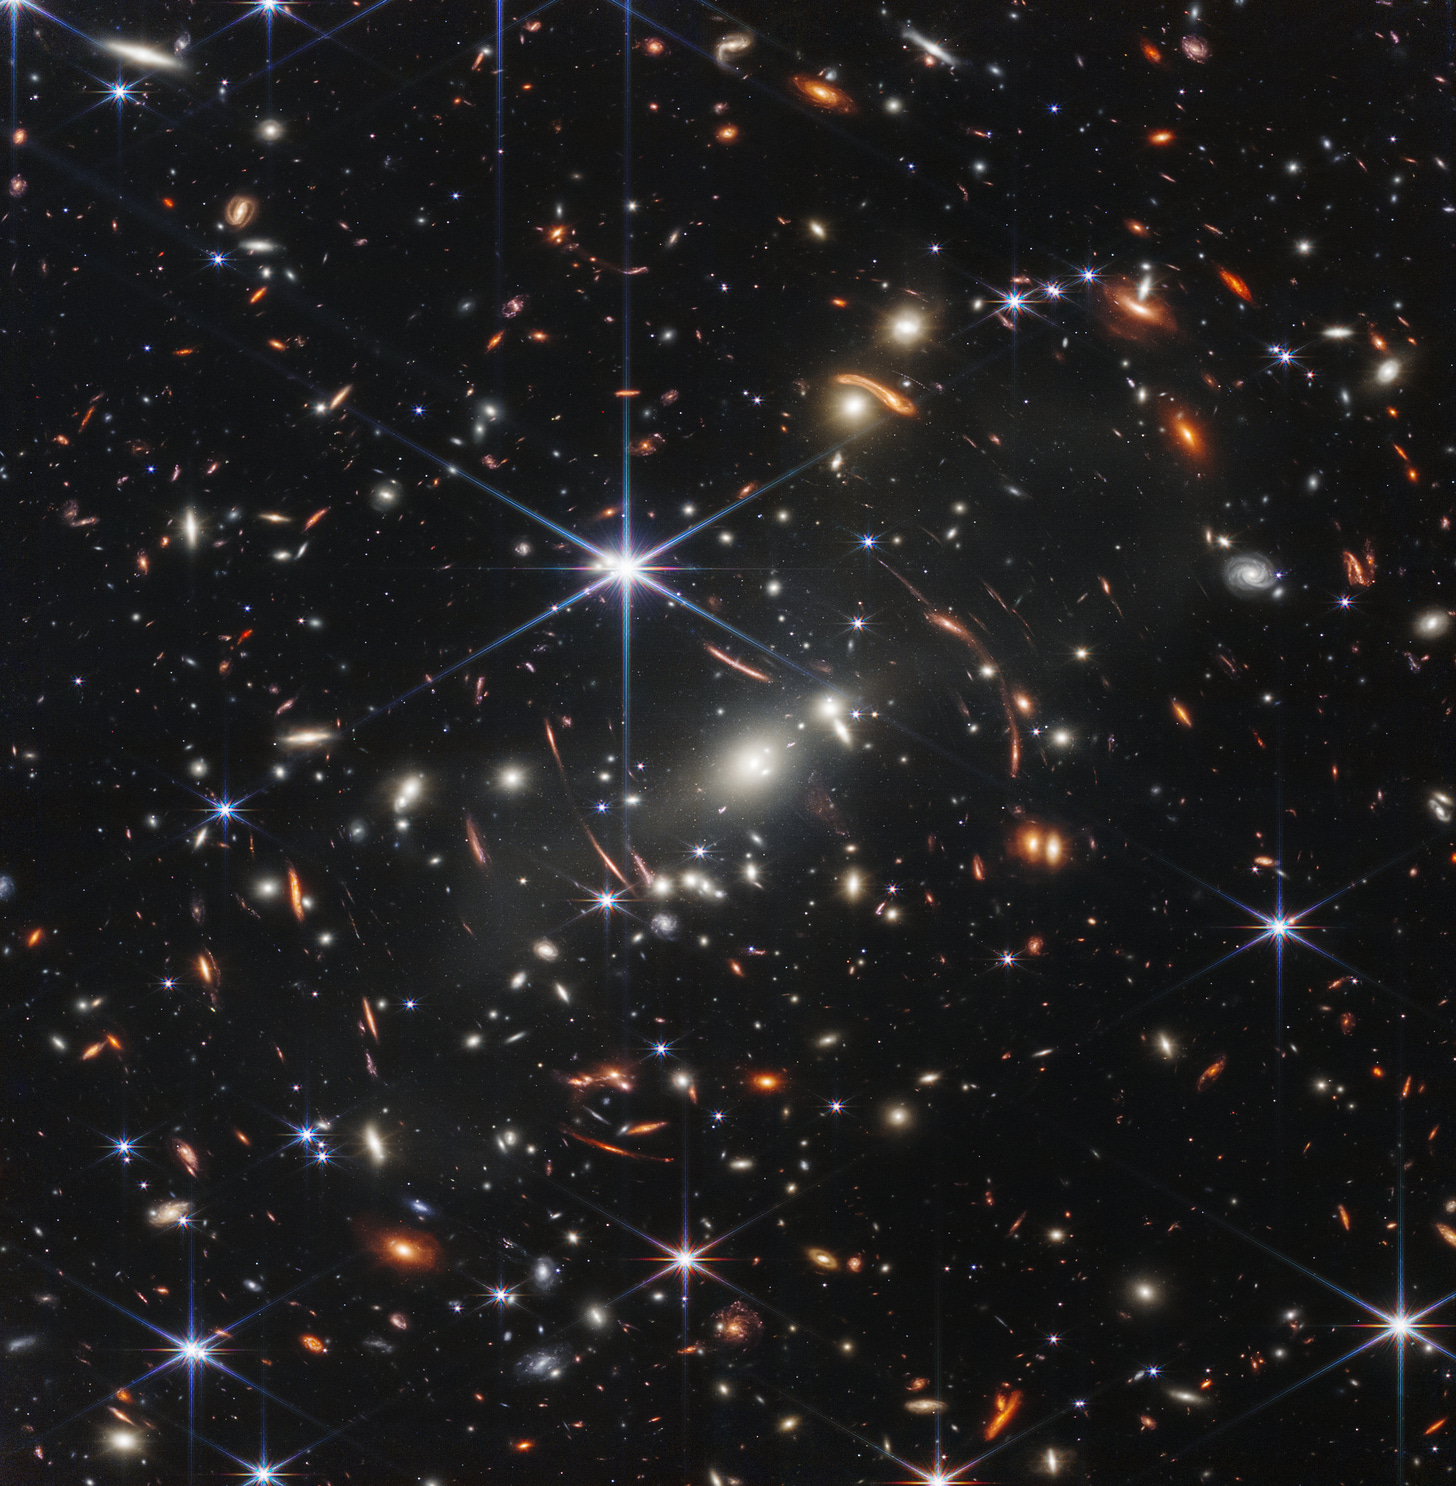 Webb telescope image of the universe